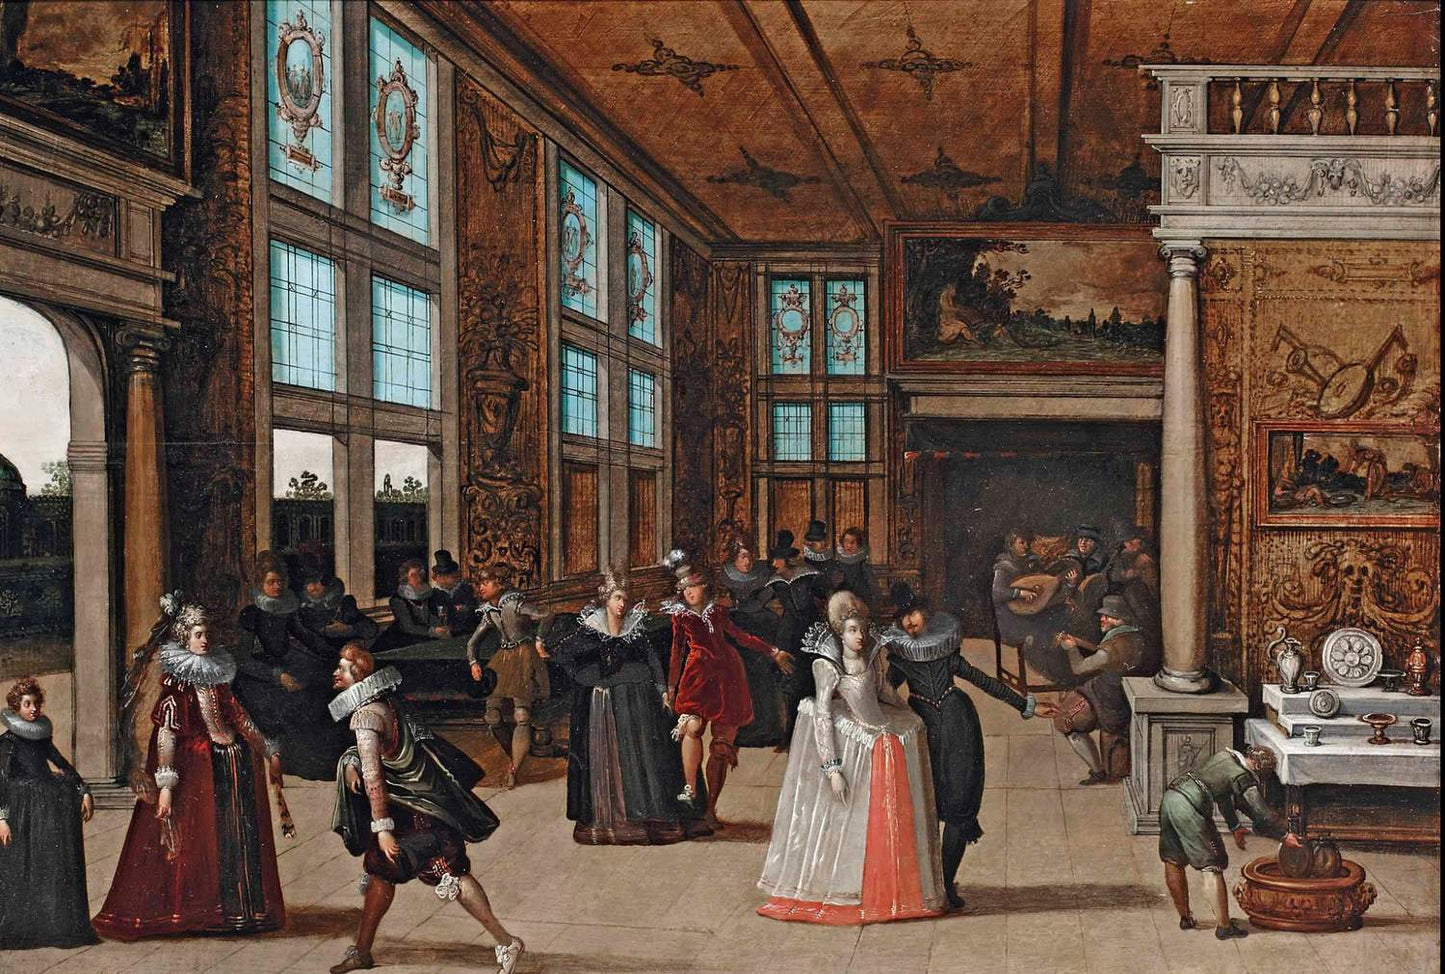 Palace interior, couples courting at ball, Louis de Caullery